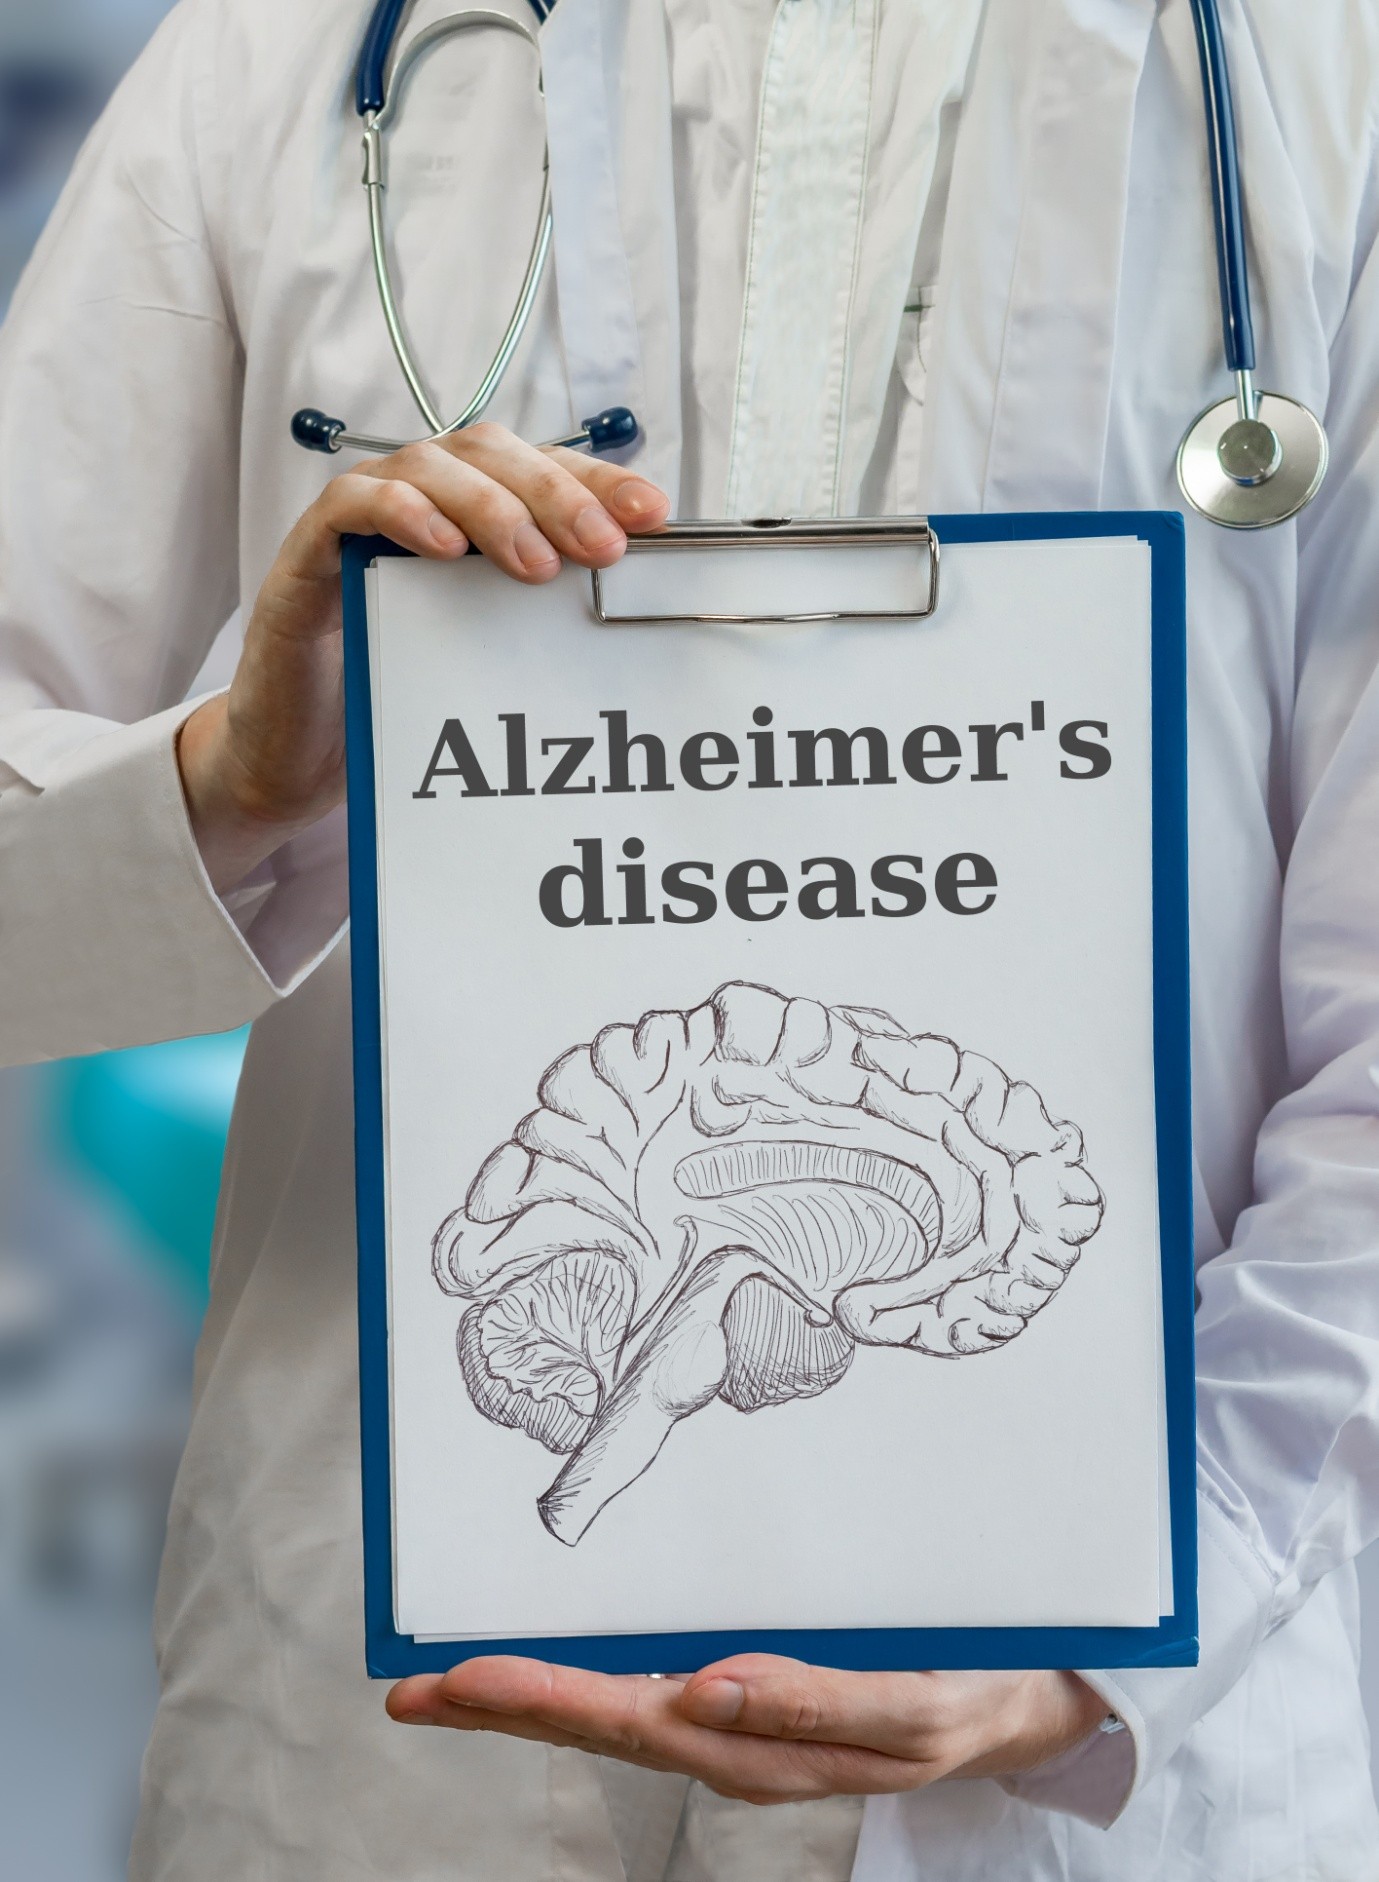 Can Diet Prevent Alzheimer’s disease?